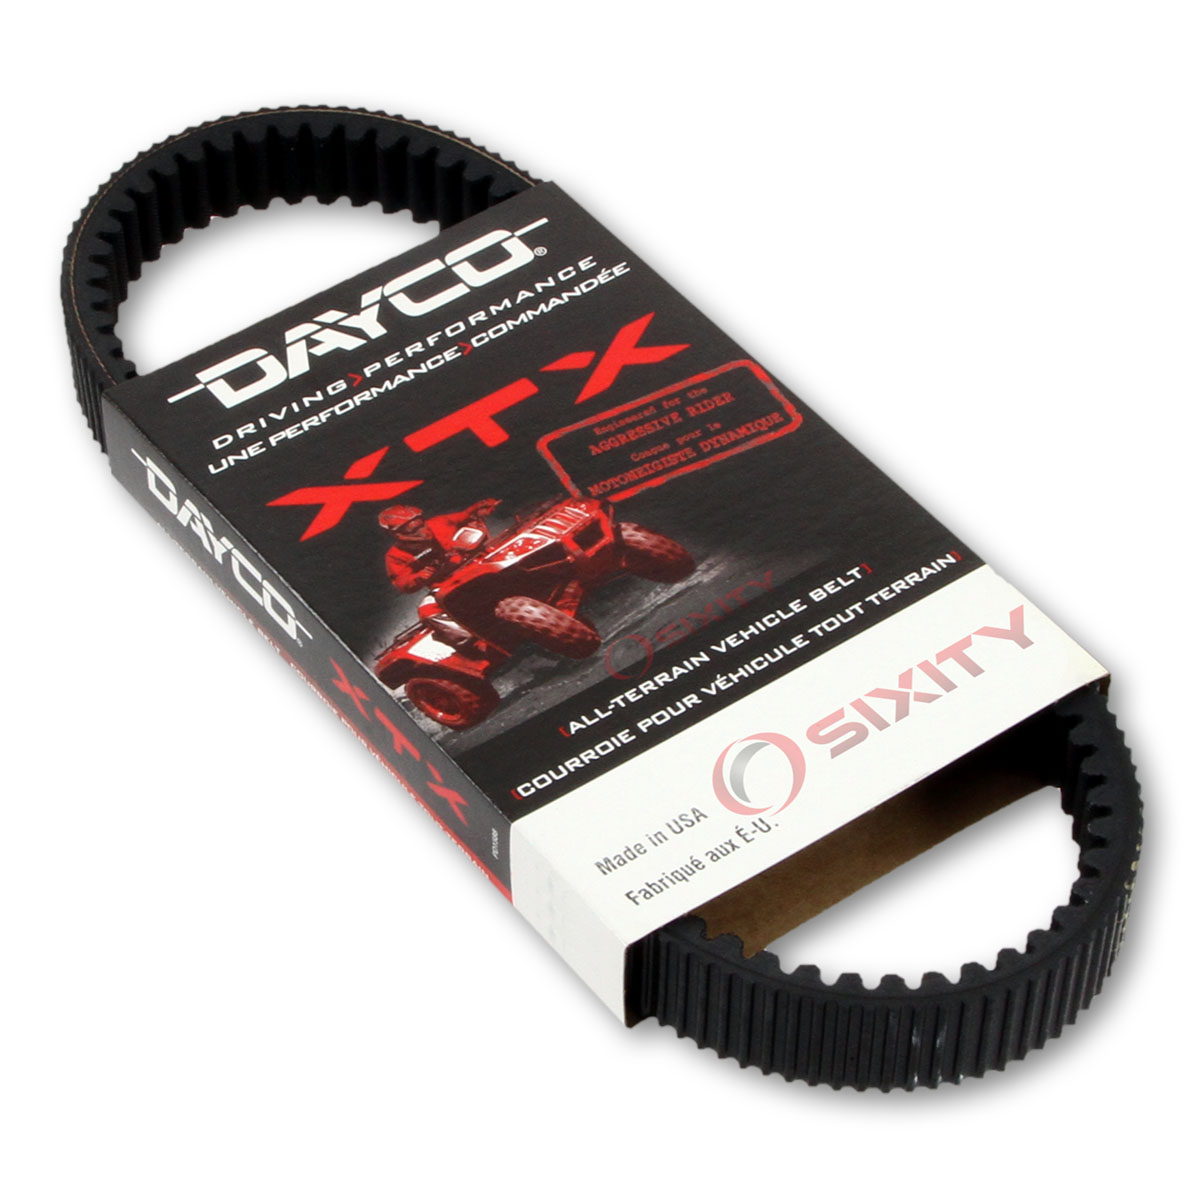 Dayco XTX Drive Belt for 2013 Arctic Cat 450 Core - Extreme Torque CVT